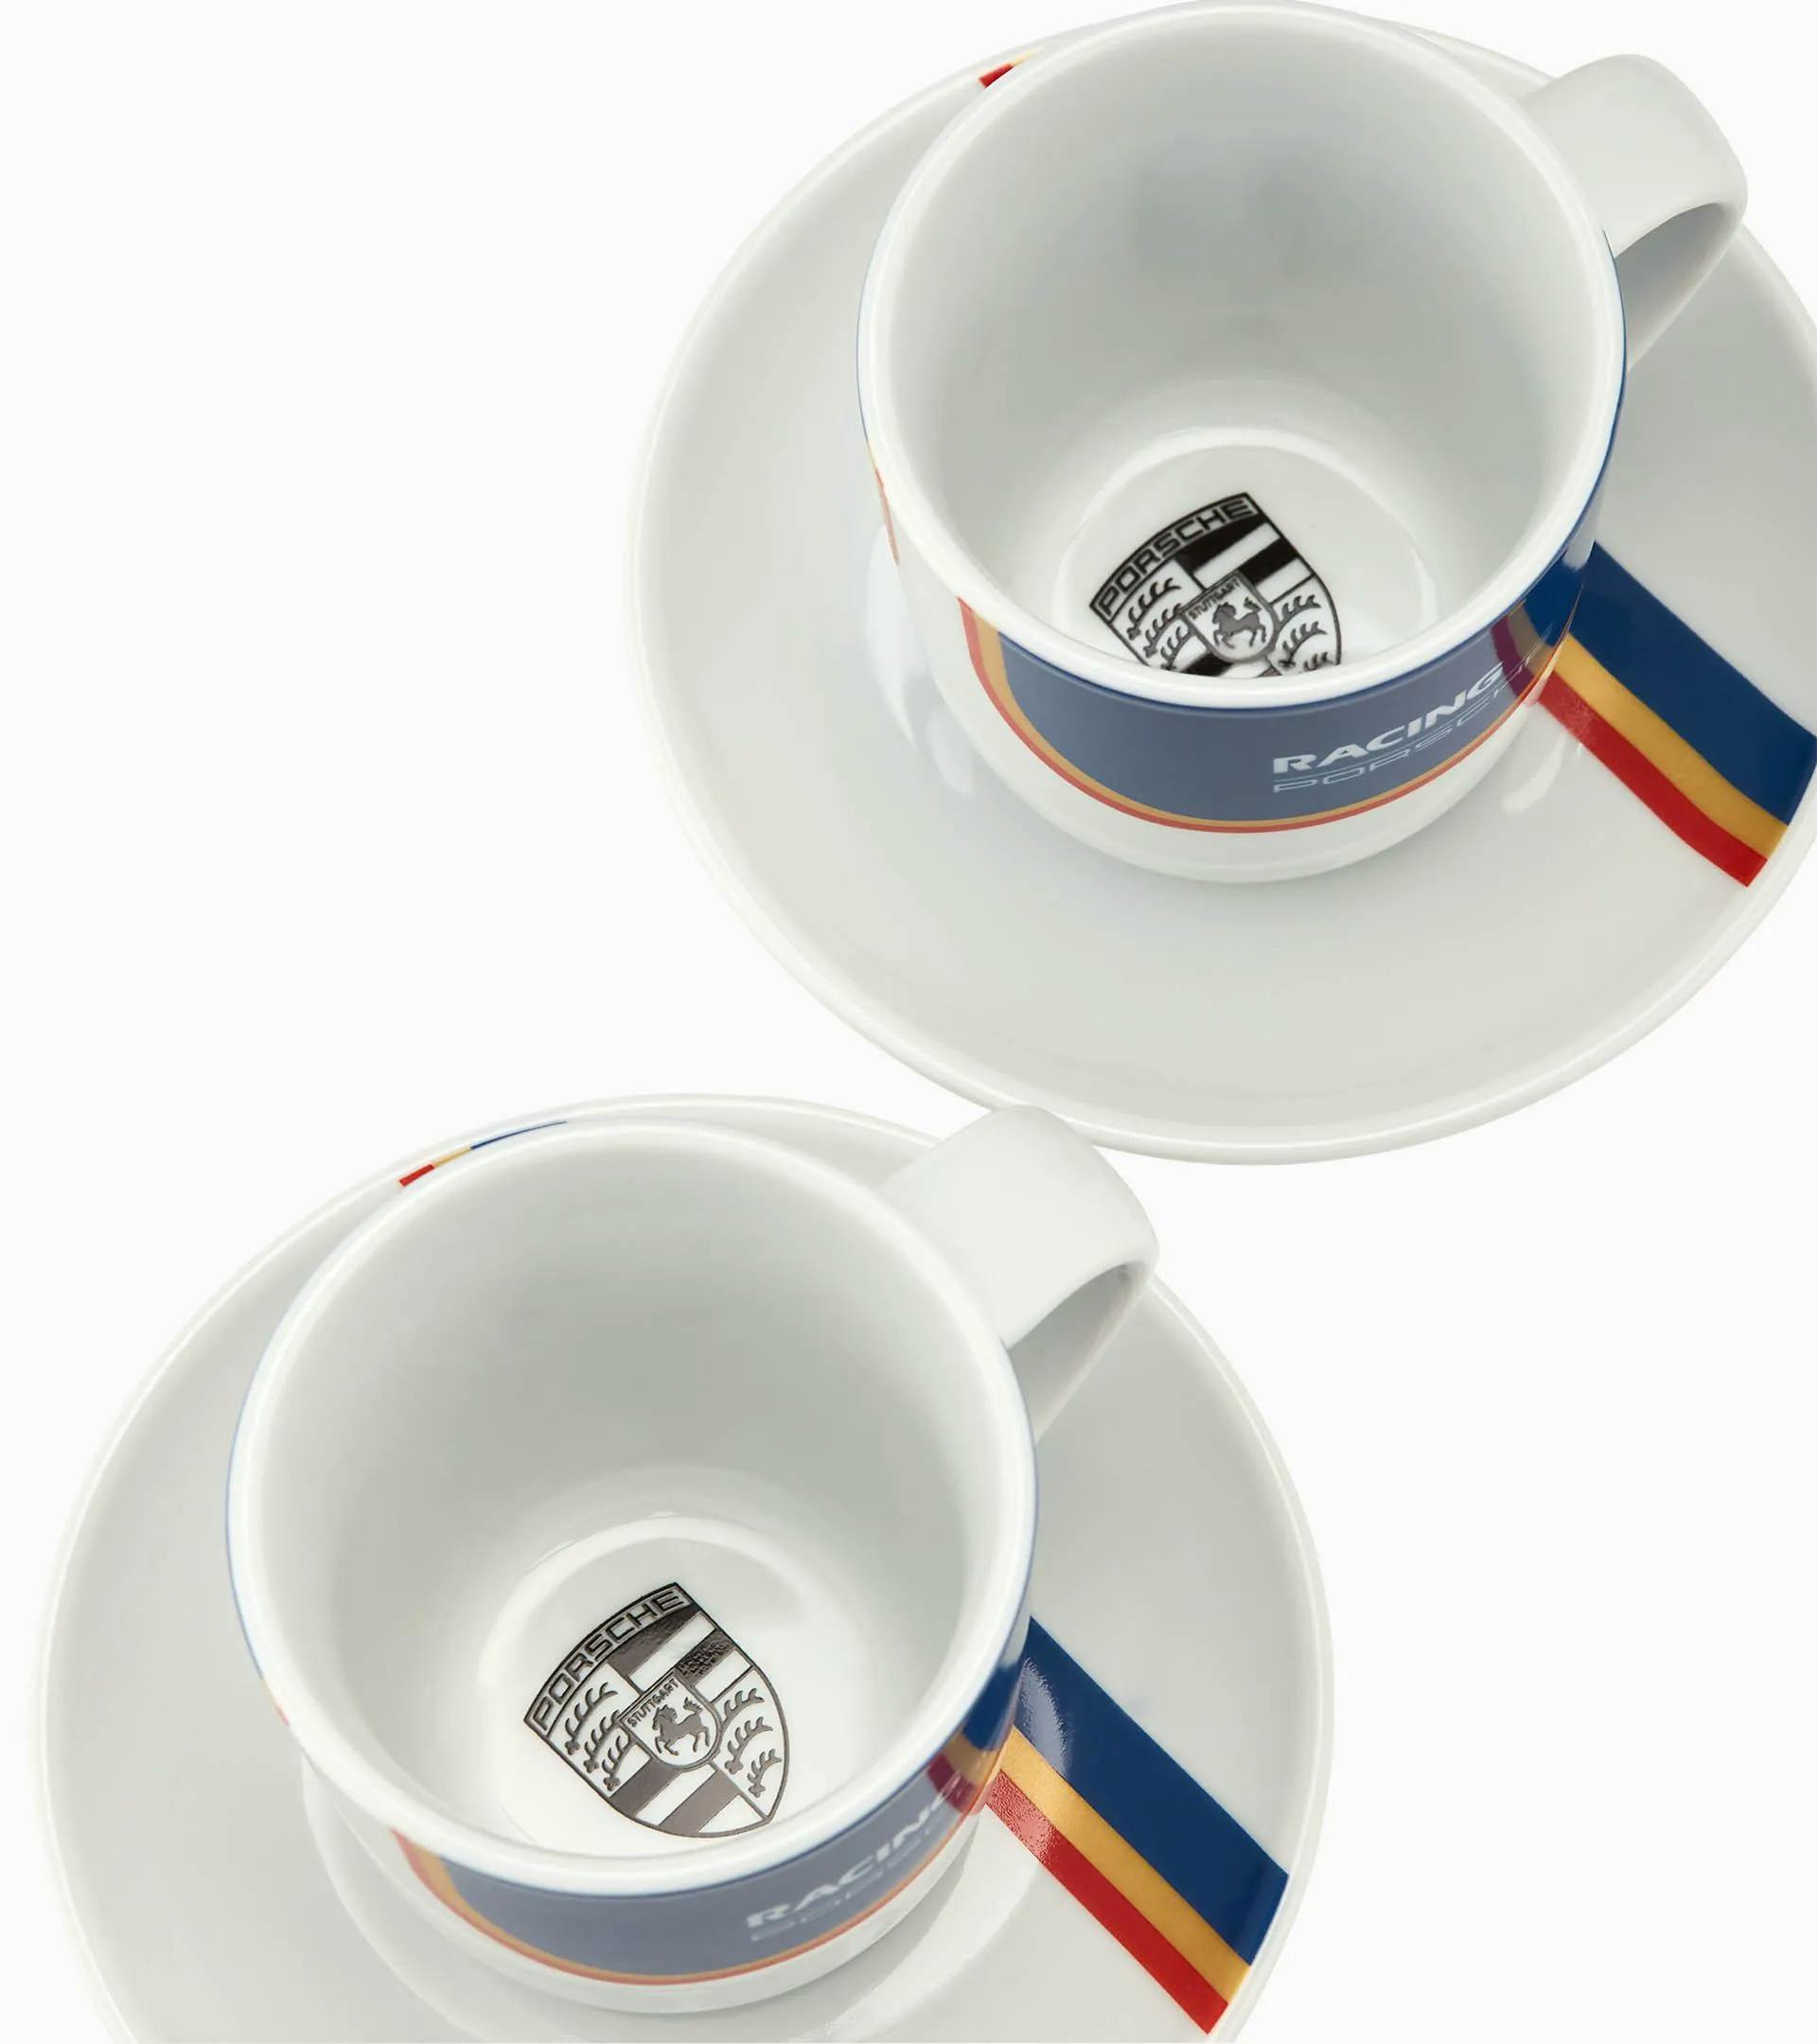 Collector's Espresso Duo nº 5 – Racing – Ltd. 2